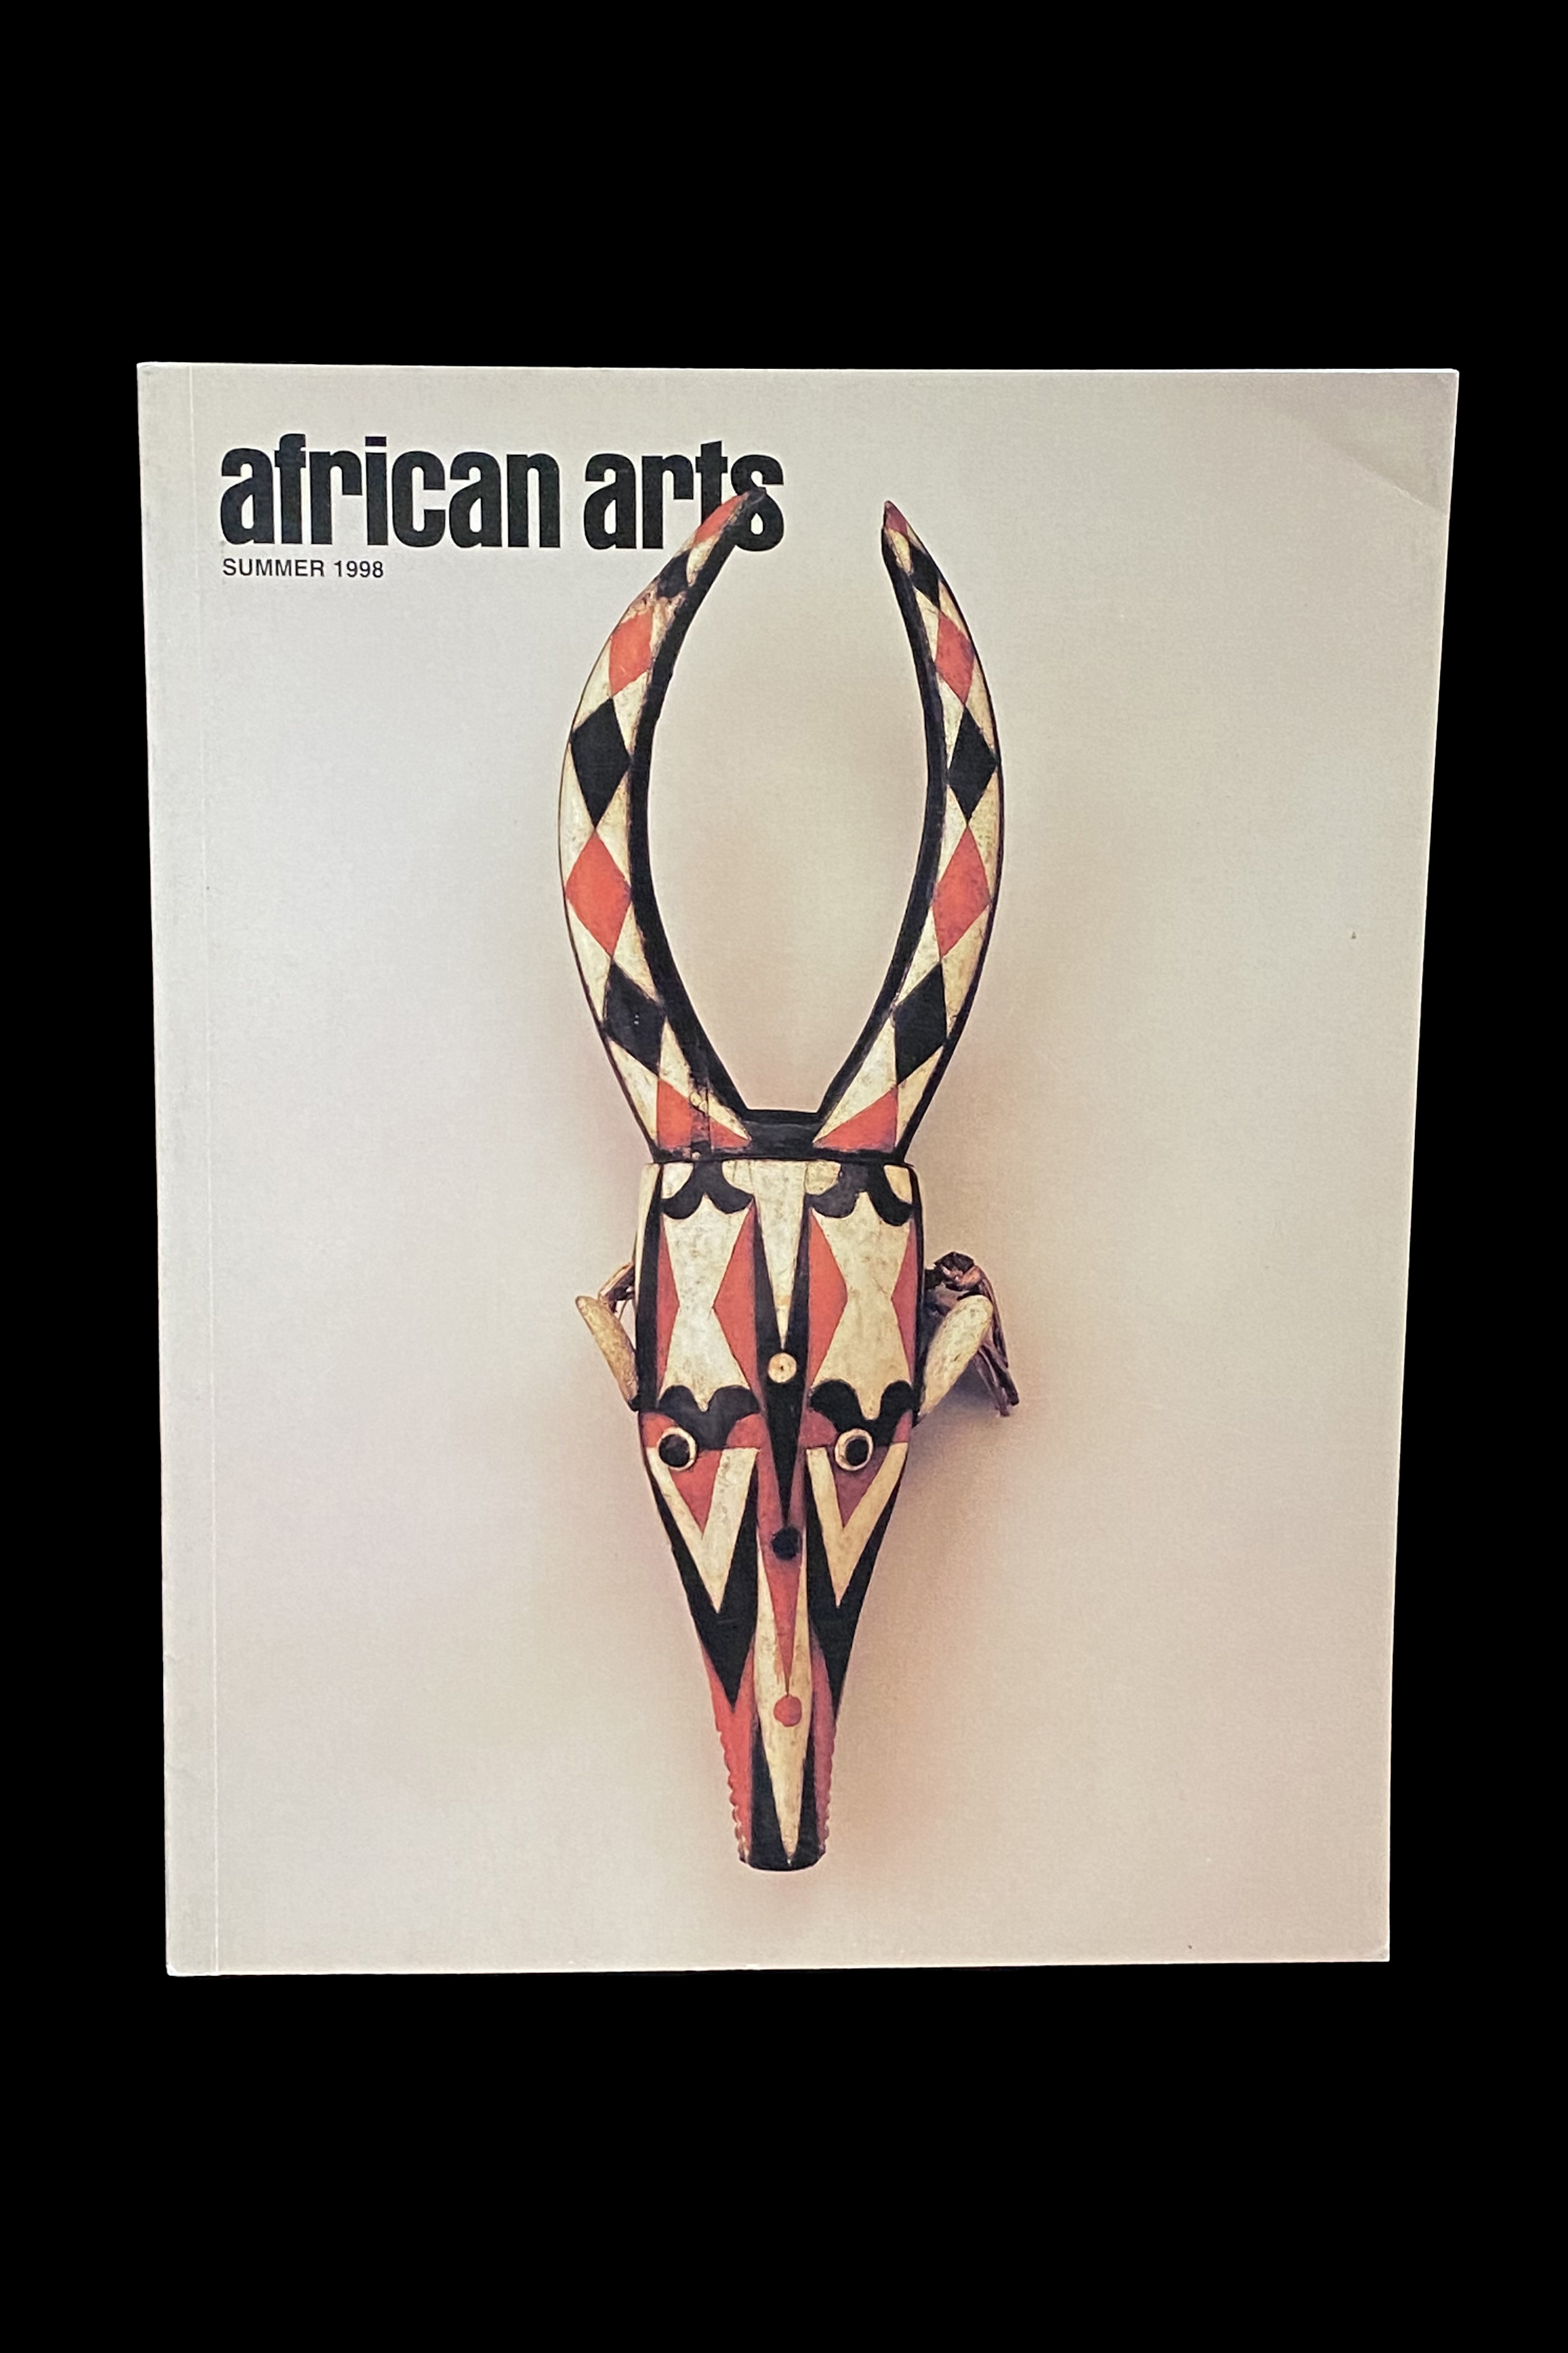  African Arts Magazine - Summer 1998